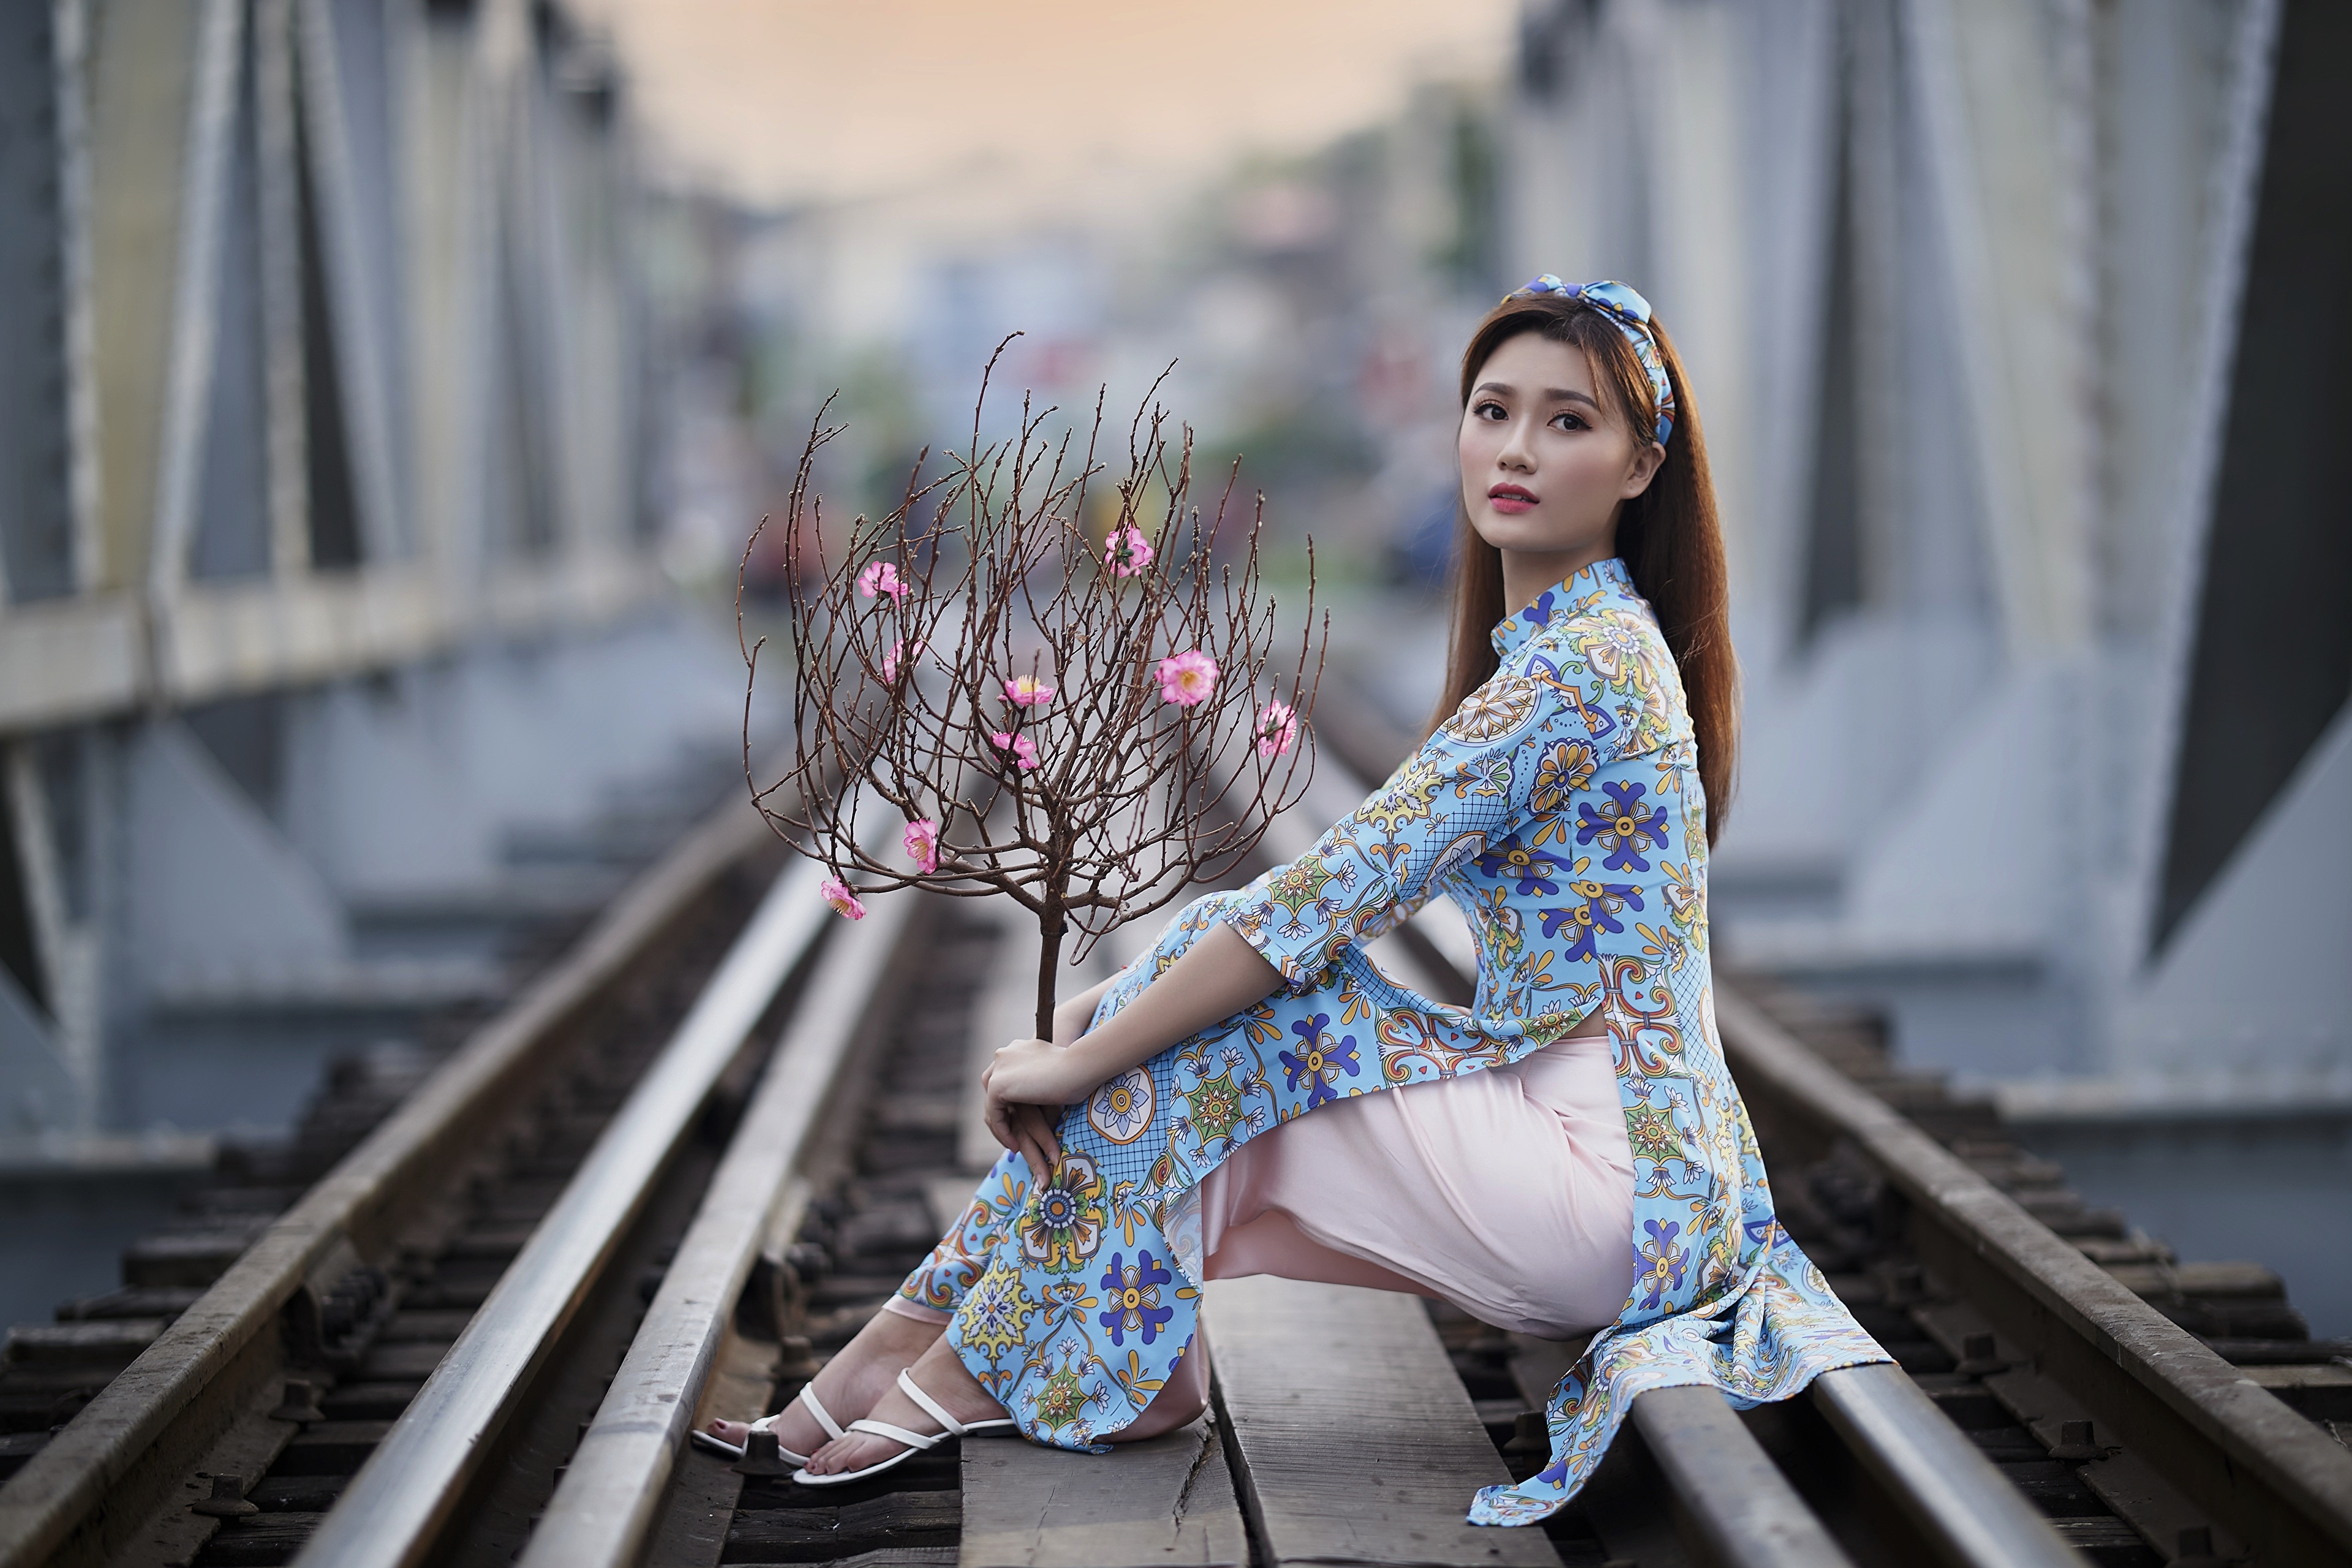 Asian Model Women Long Hair Dark Hair Depth Of Field Women Outdoors Sitting Railroad Track Barefoot  3840x2560